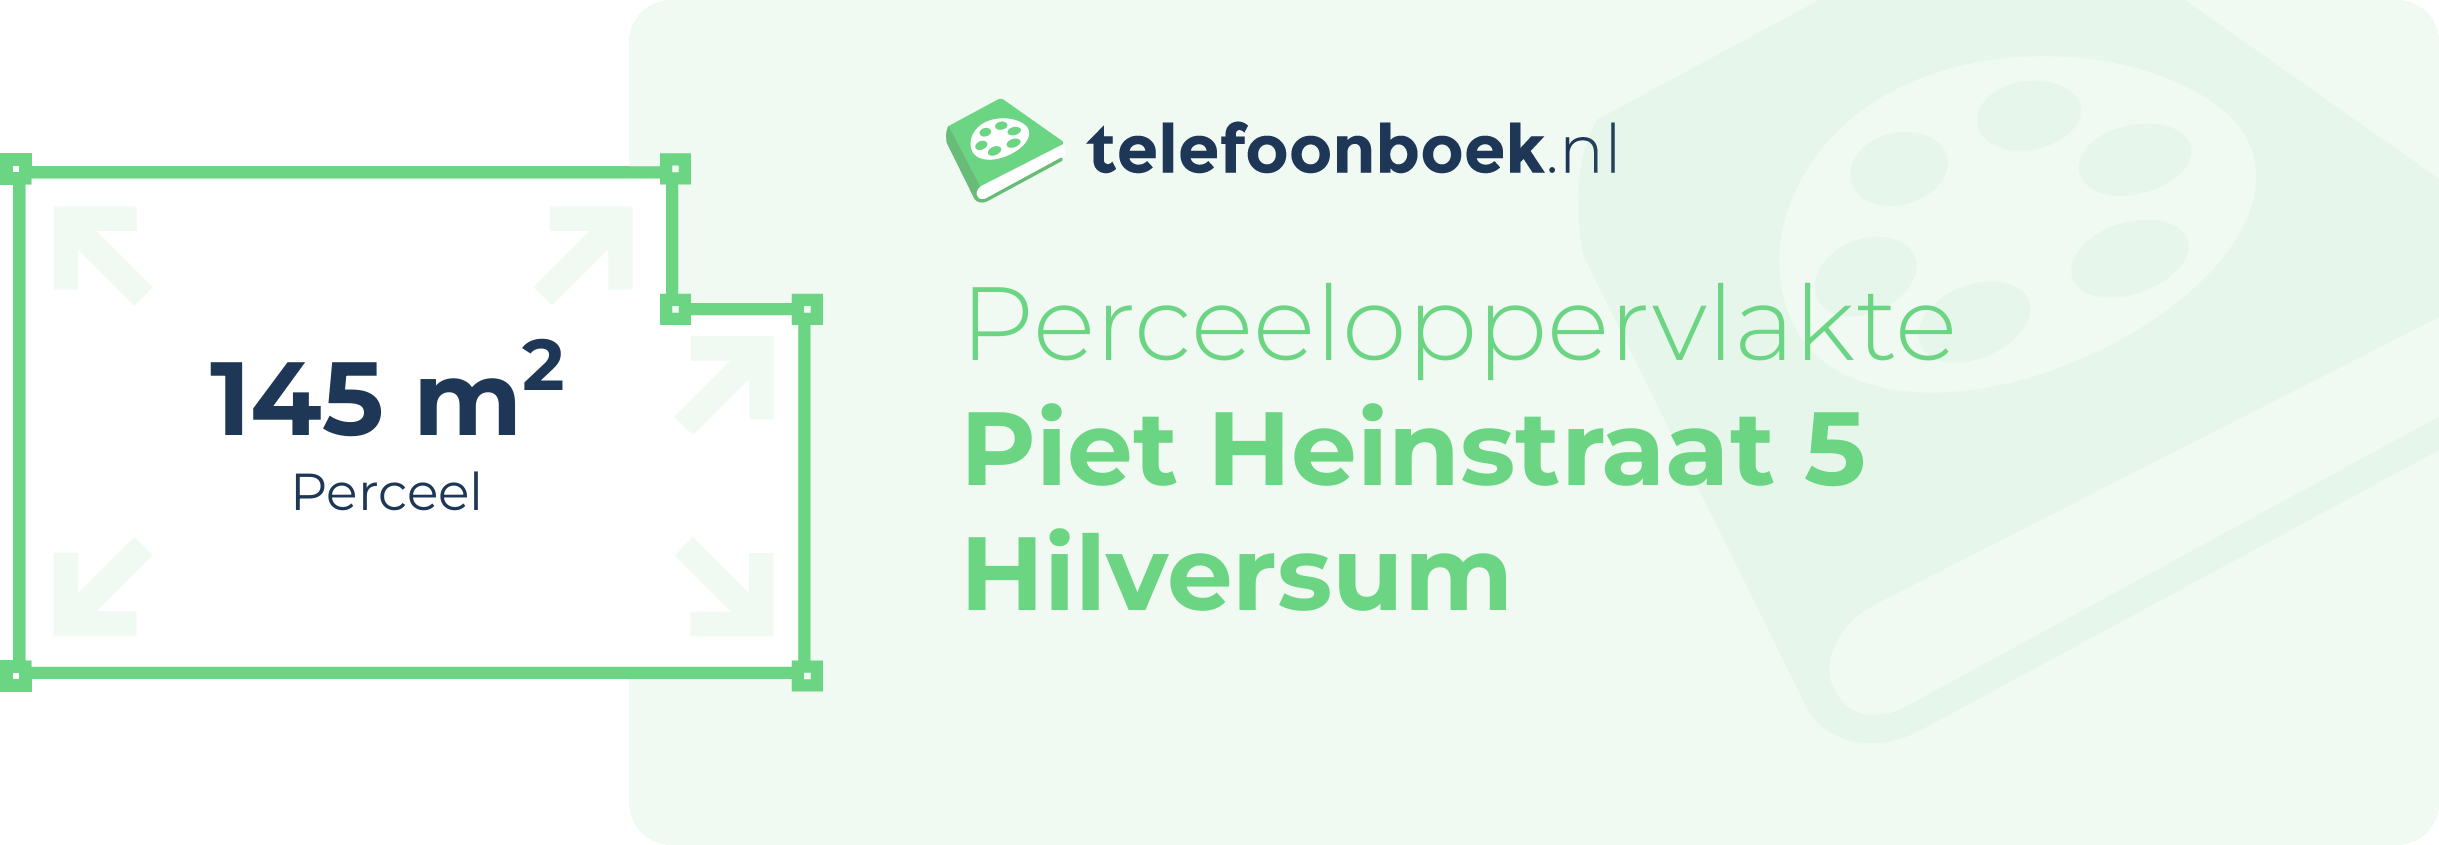 Perceeloppervlakte Piet Heinstraat 5 Hilversum